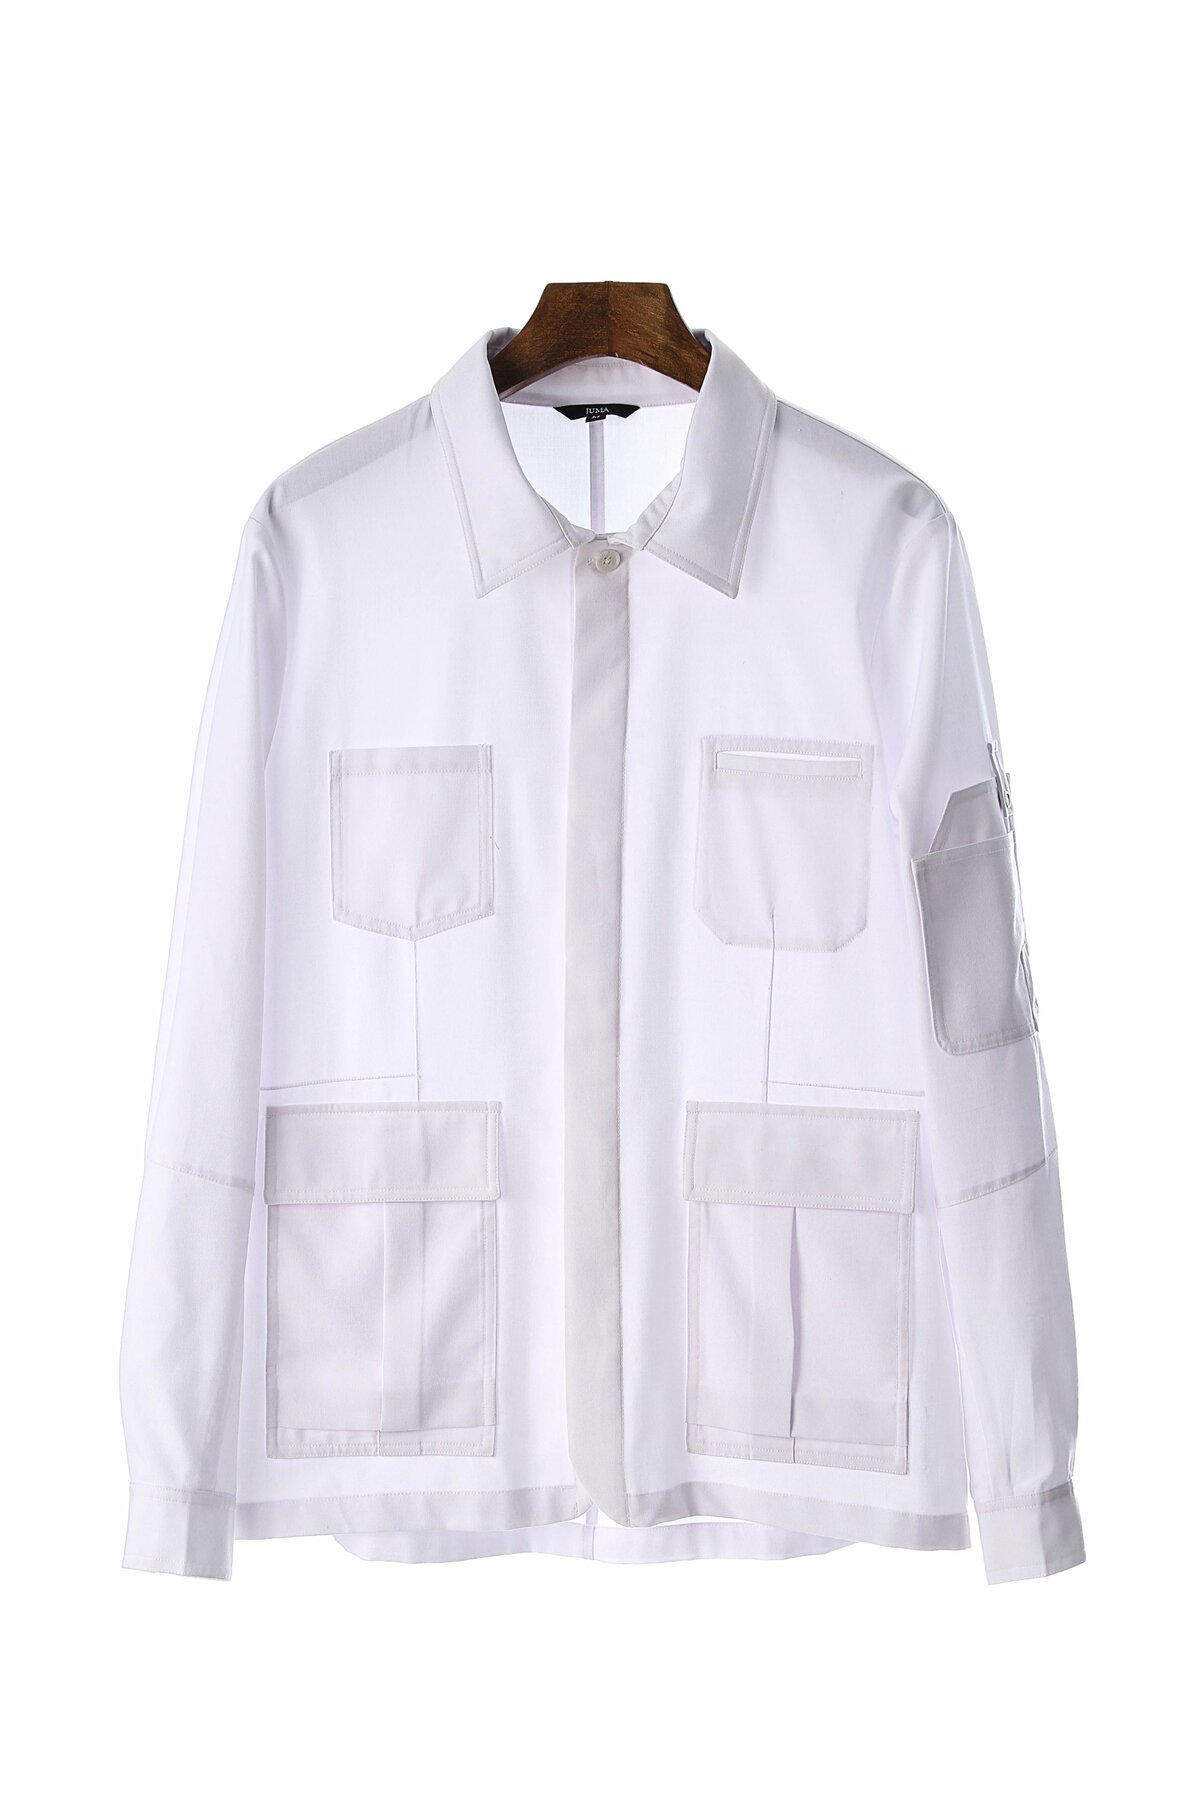 JUMA 斜口袋夹克 - 8 个再生水瓶 - 白色｜JUMA Slant Pocket Jacket - 8 Recycled Water Bottles -White